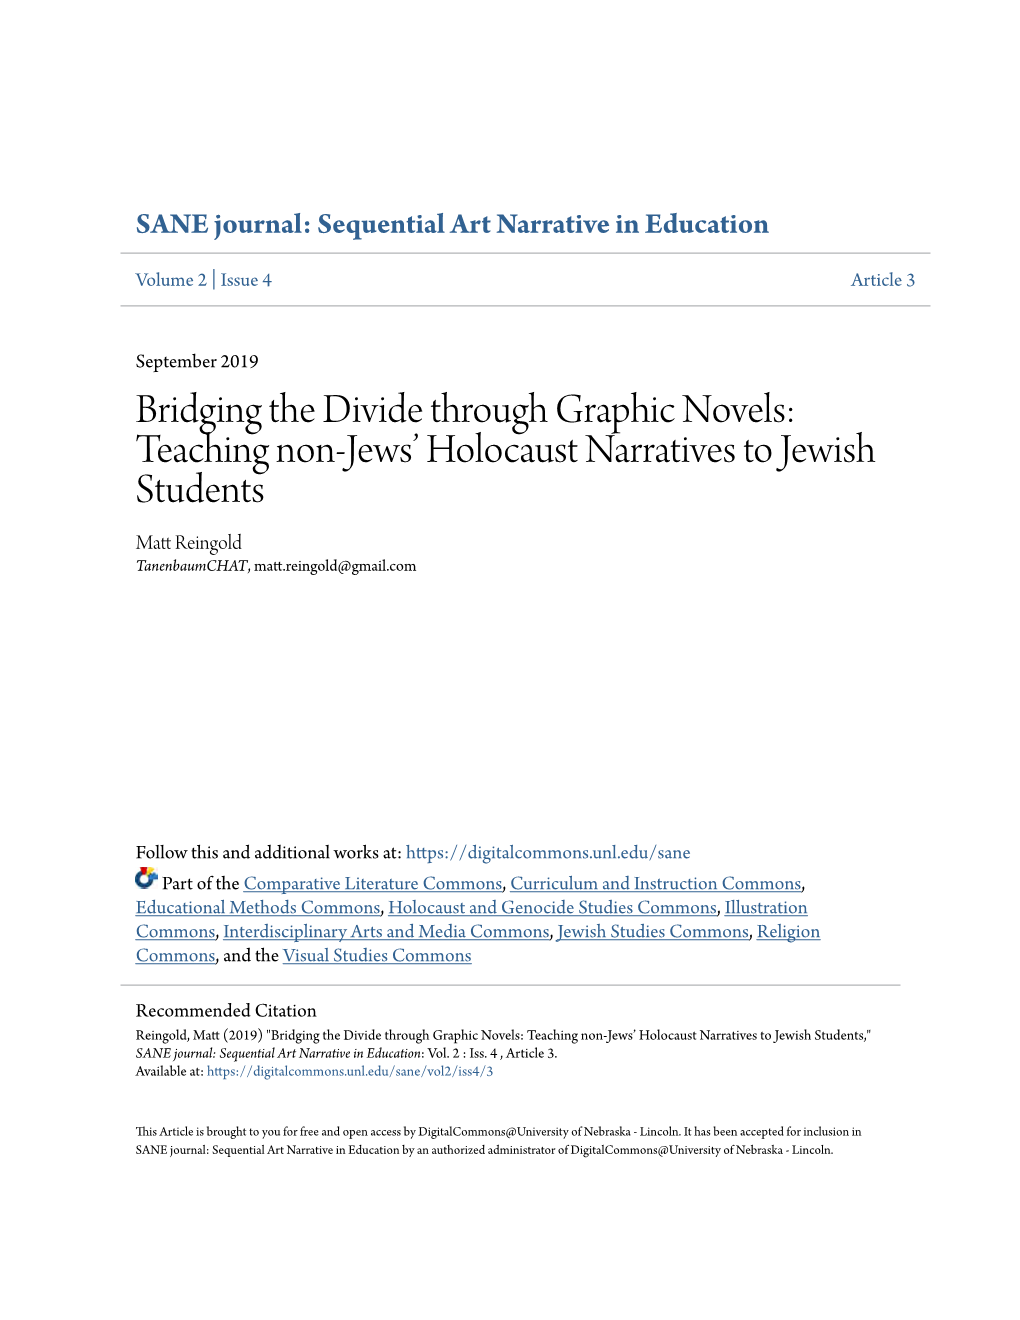 Teaching Non-Jews' Holocaust Narratives to Jewish Students